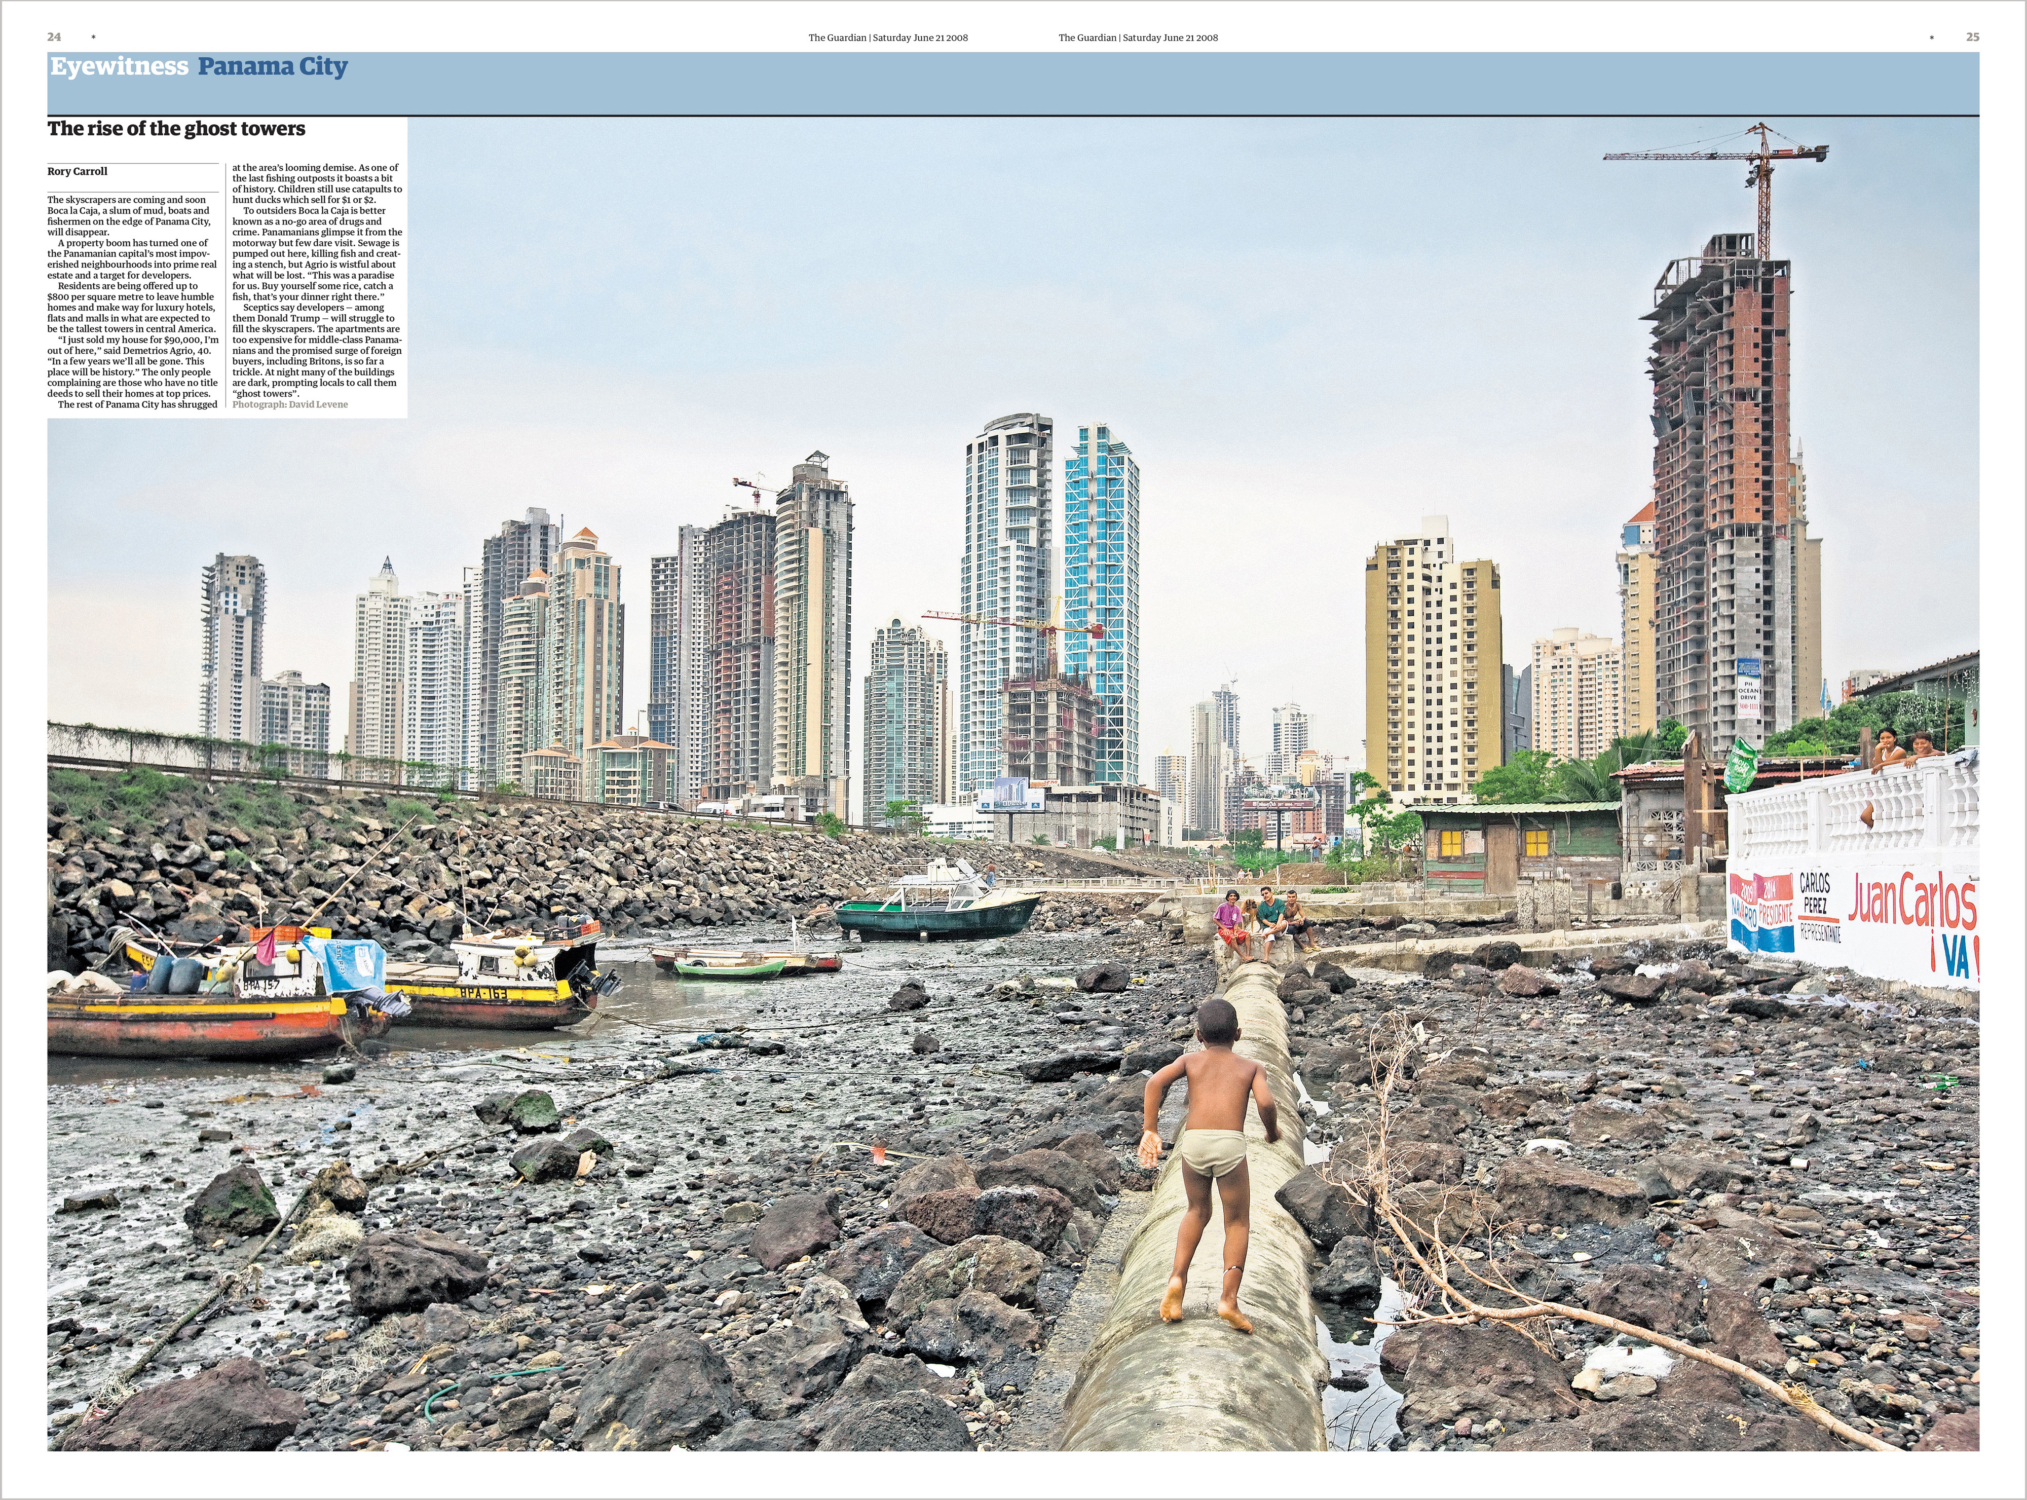 Panama City sky scrapers, Boca la Caja slums, David Levene Photography